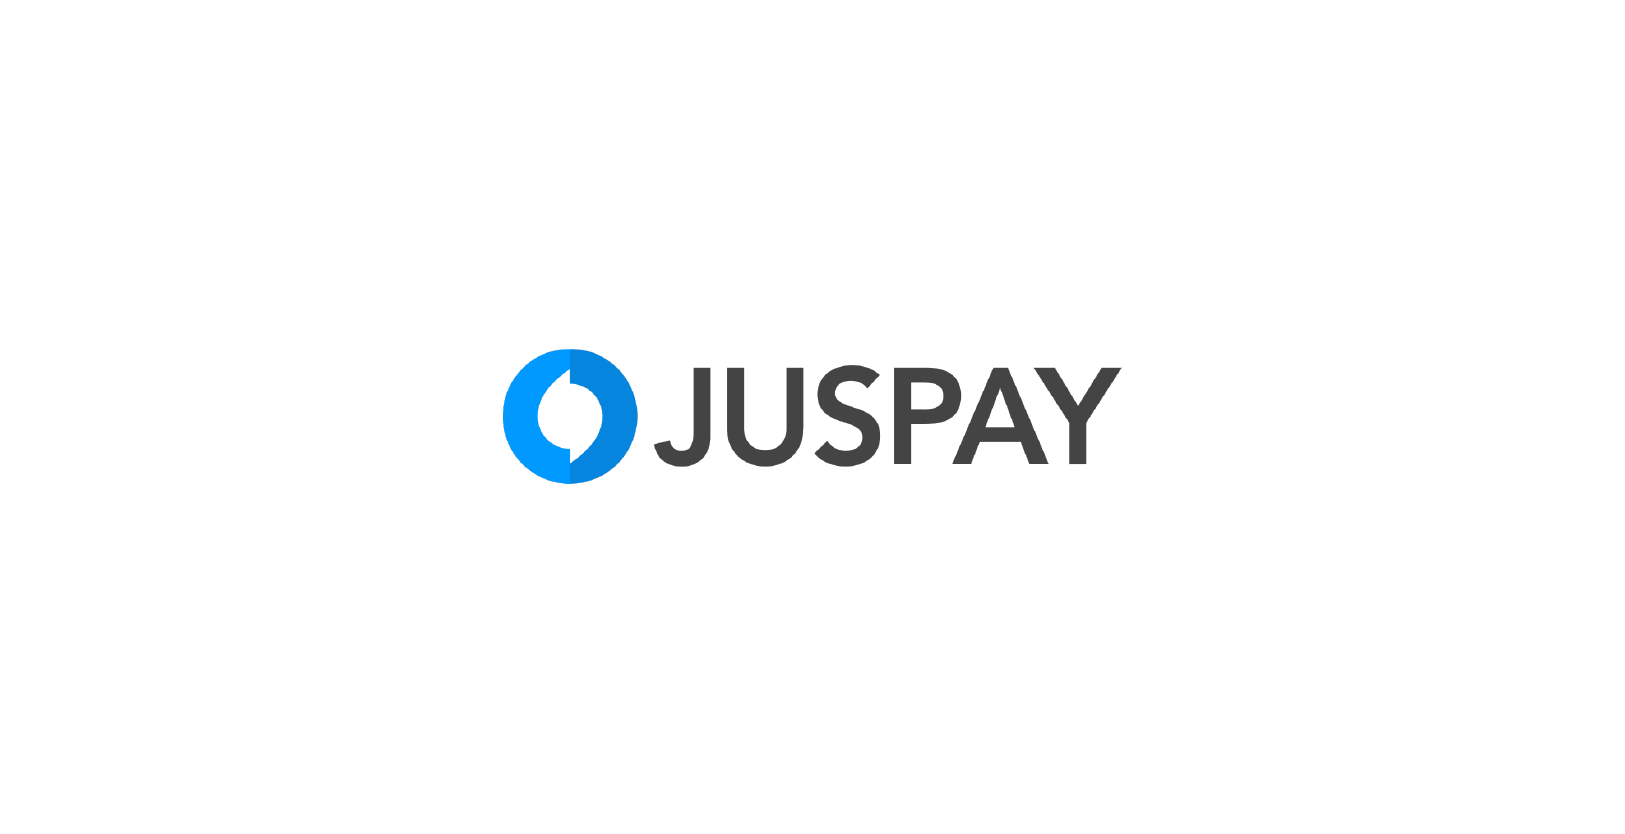 Vision Fund investment portfolio company Juspay's logo